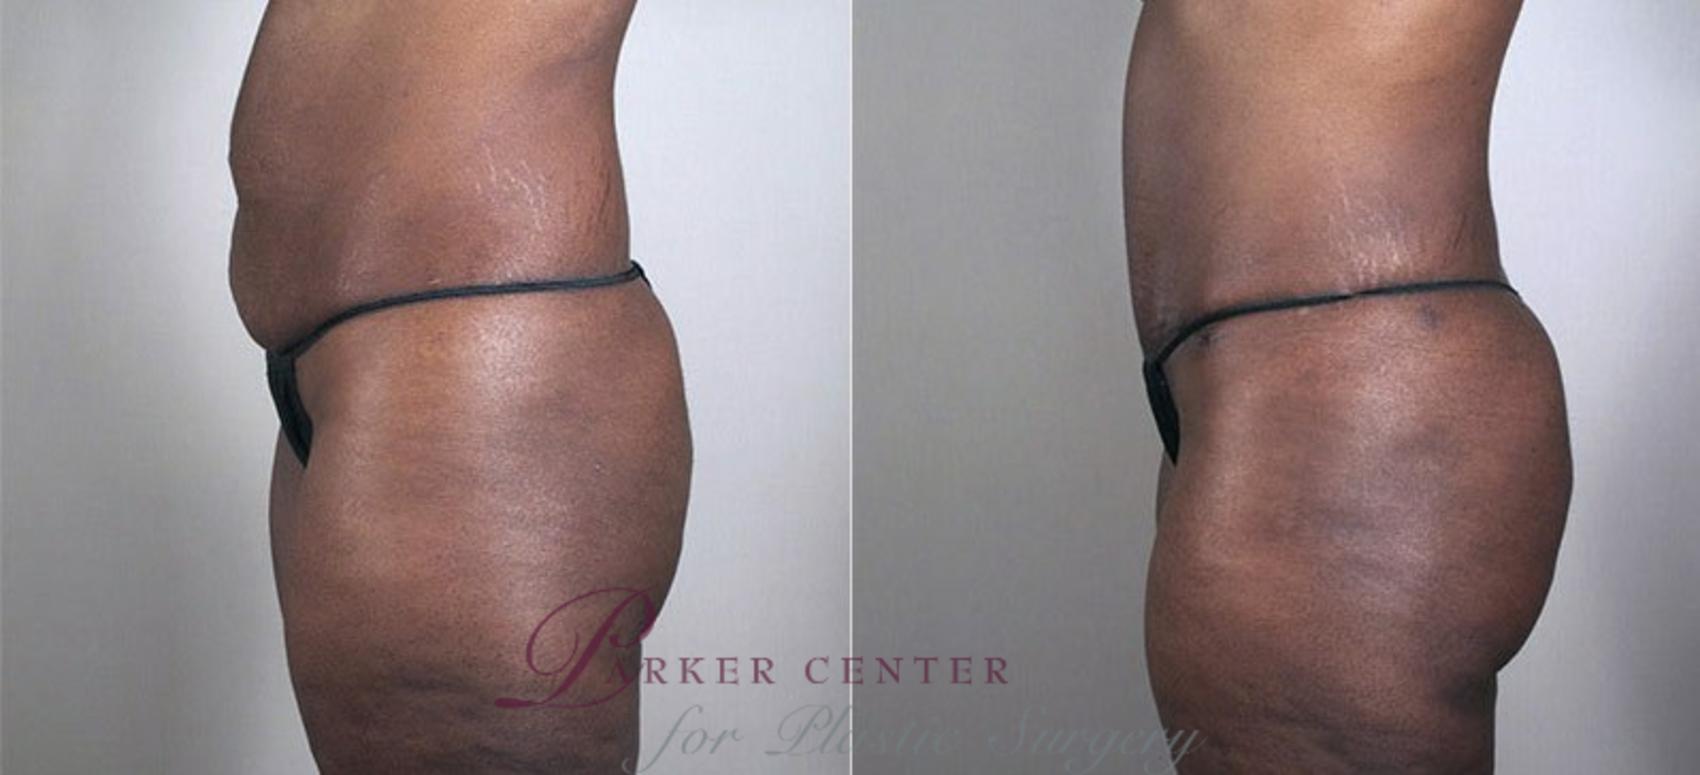 Tummy Tuck Case 727 Before & After View #2 | Paramus, NJ | Parker Center for Plastic Surgery